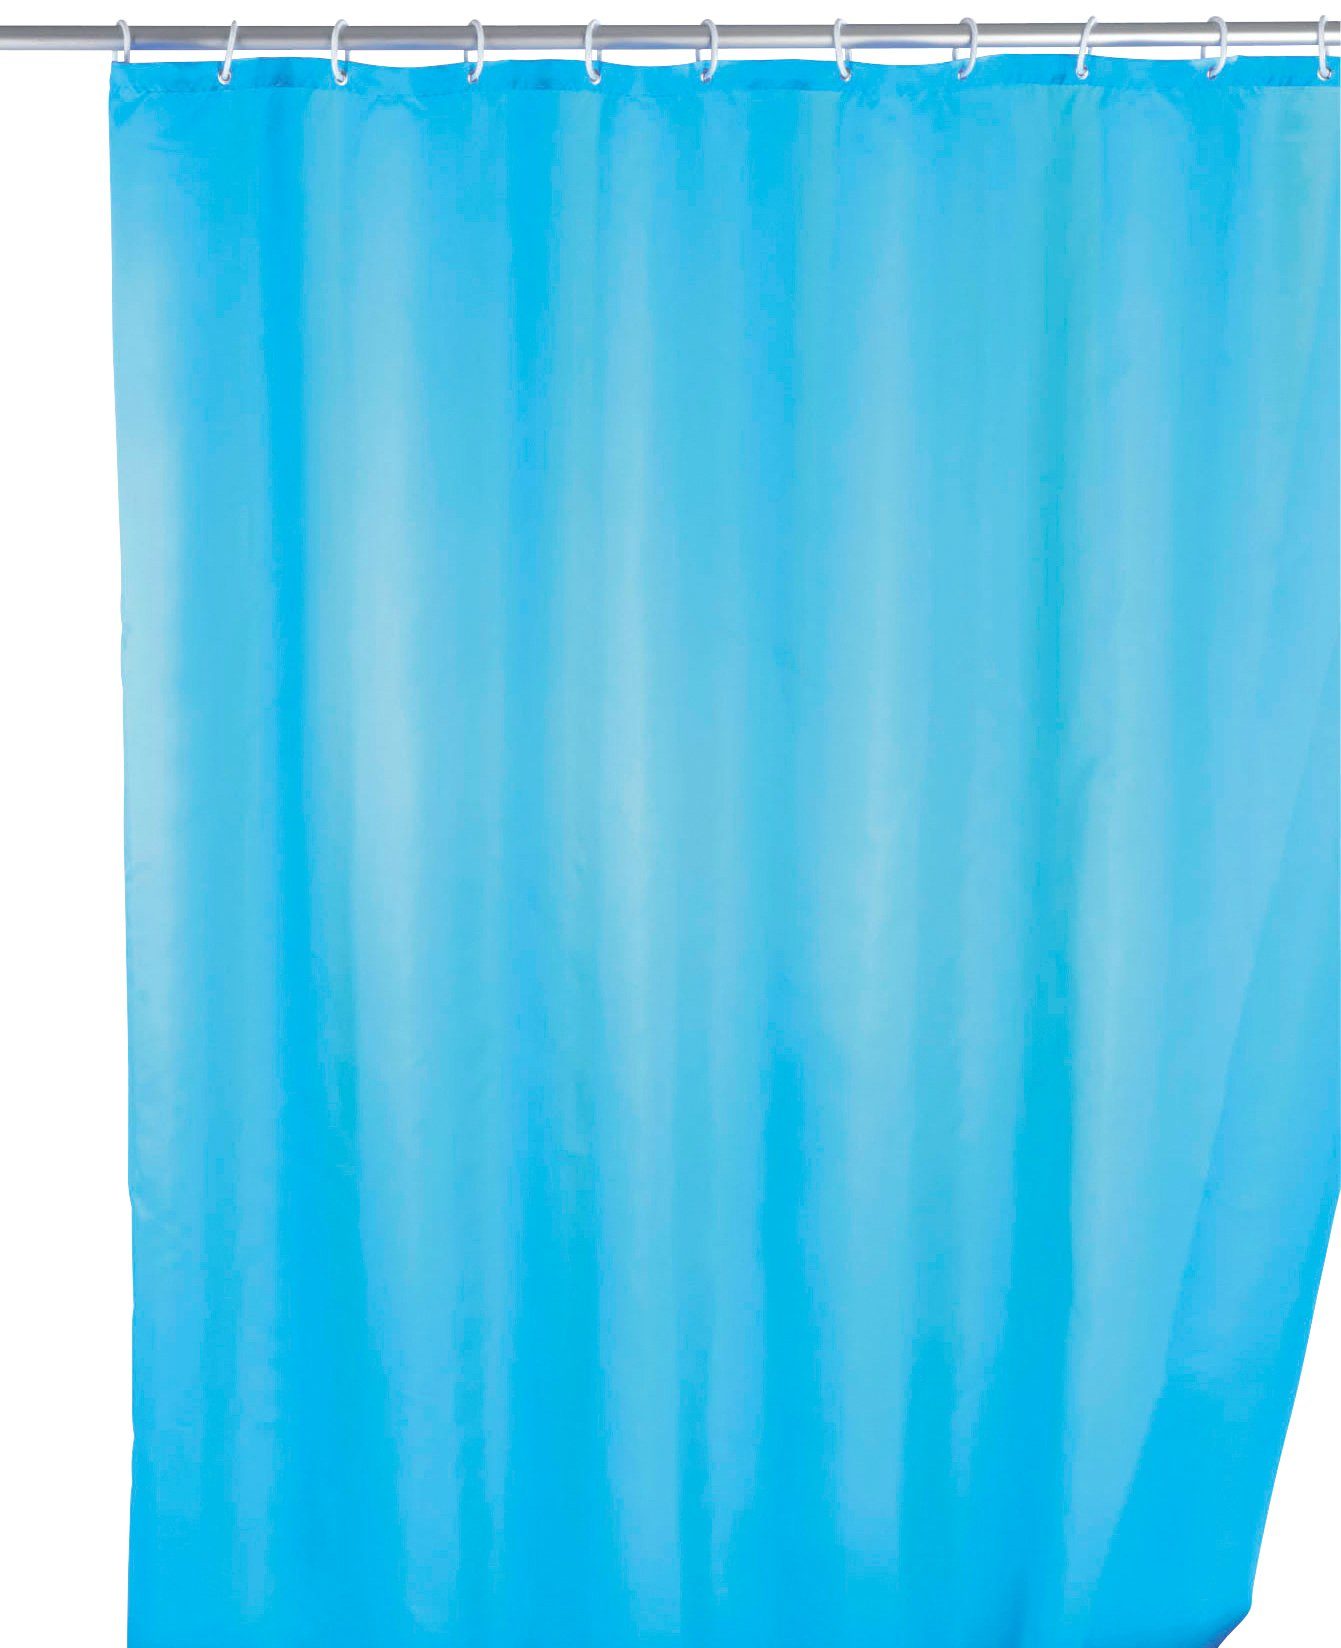 Wenko gordijn AntiMold douche gordijn 180x200xcm polyester blauw